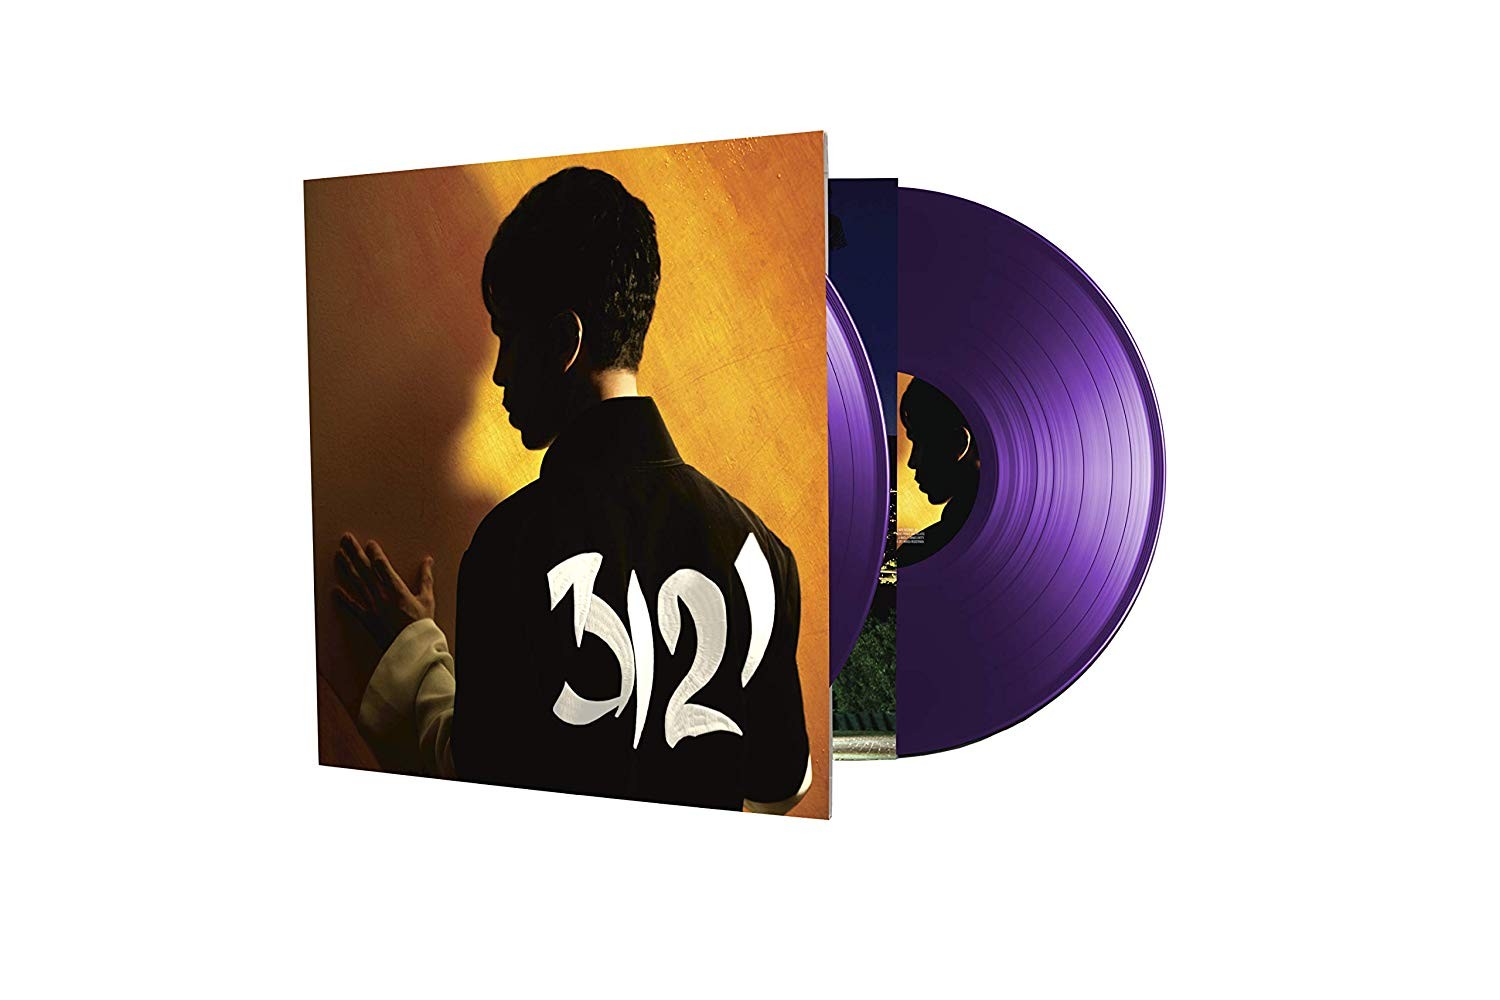 Prince - 3121 2XLP Purple Vinyl